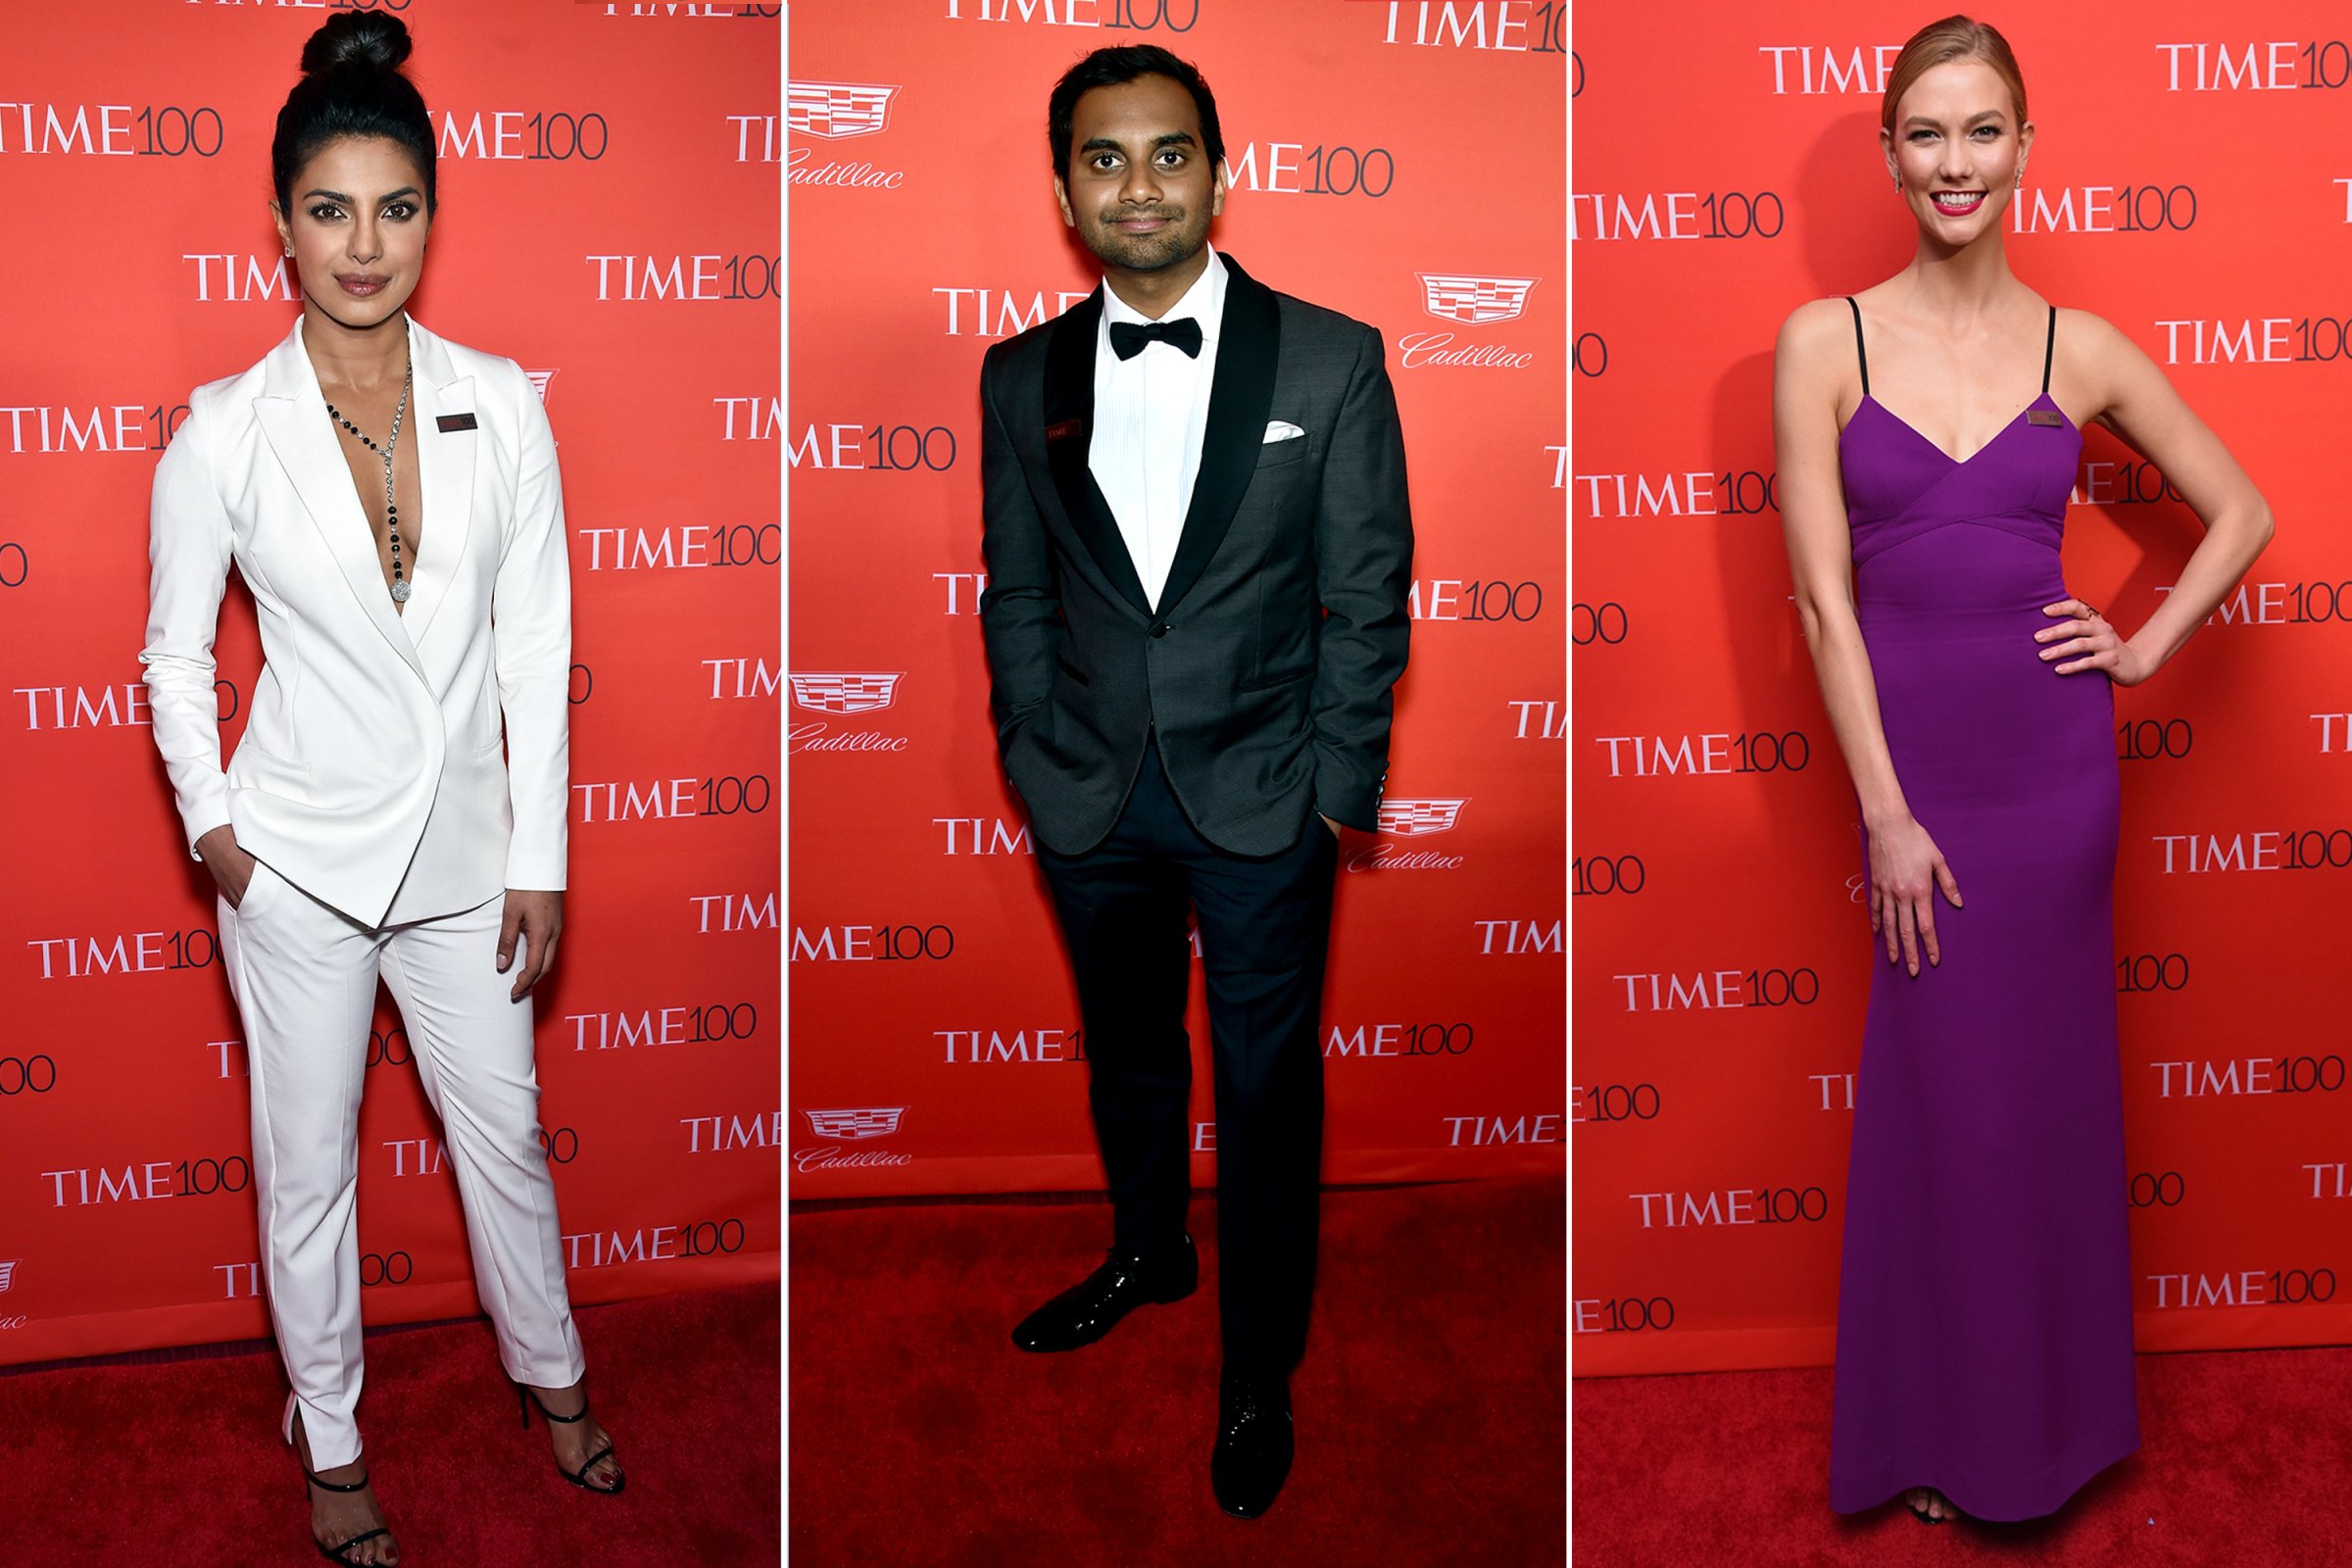 Priyanka Chopra, Aziz Ansari and Karlie Kloss at the TIME 100 gala in New York on April 26, 2016.